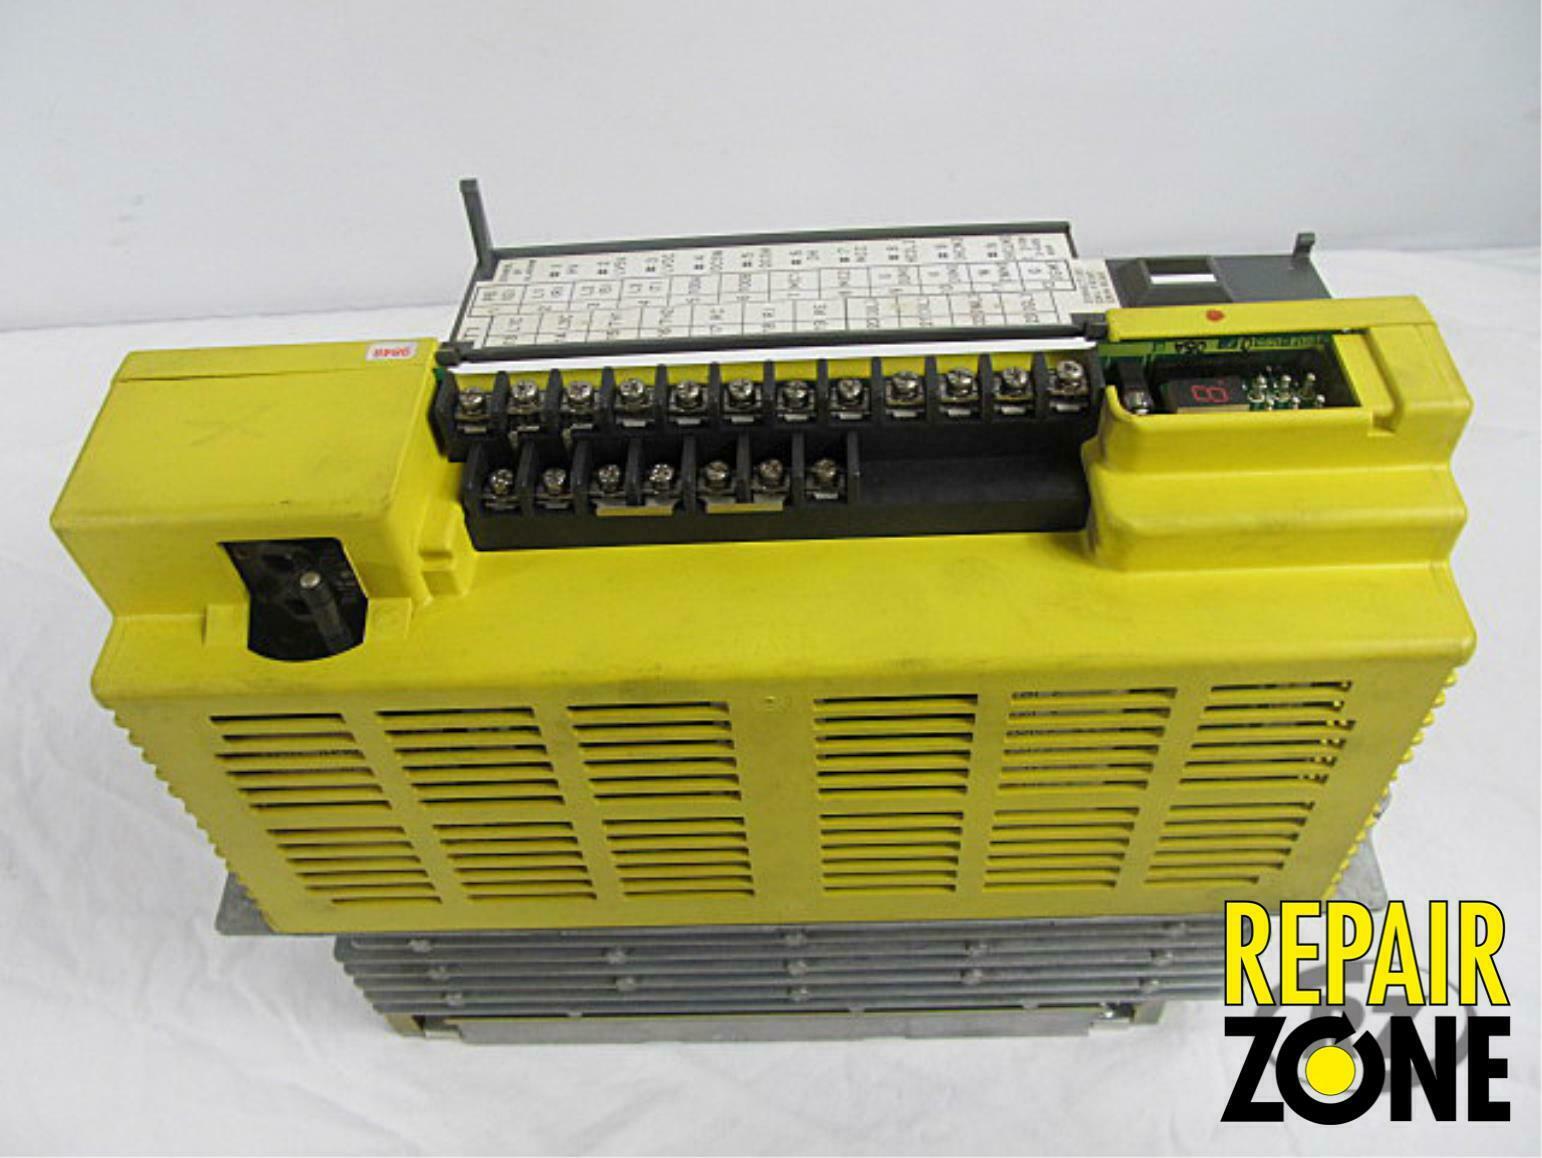 A06b-6066-h003 Fanuc Servo Amplifier Remanufactured *1 Year Warranty* Fully Reb